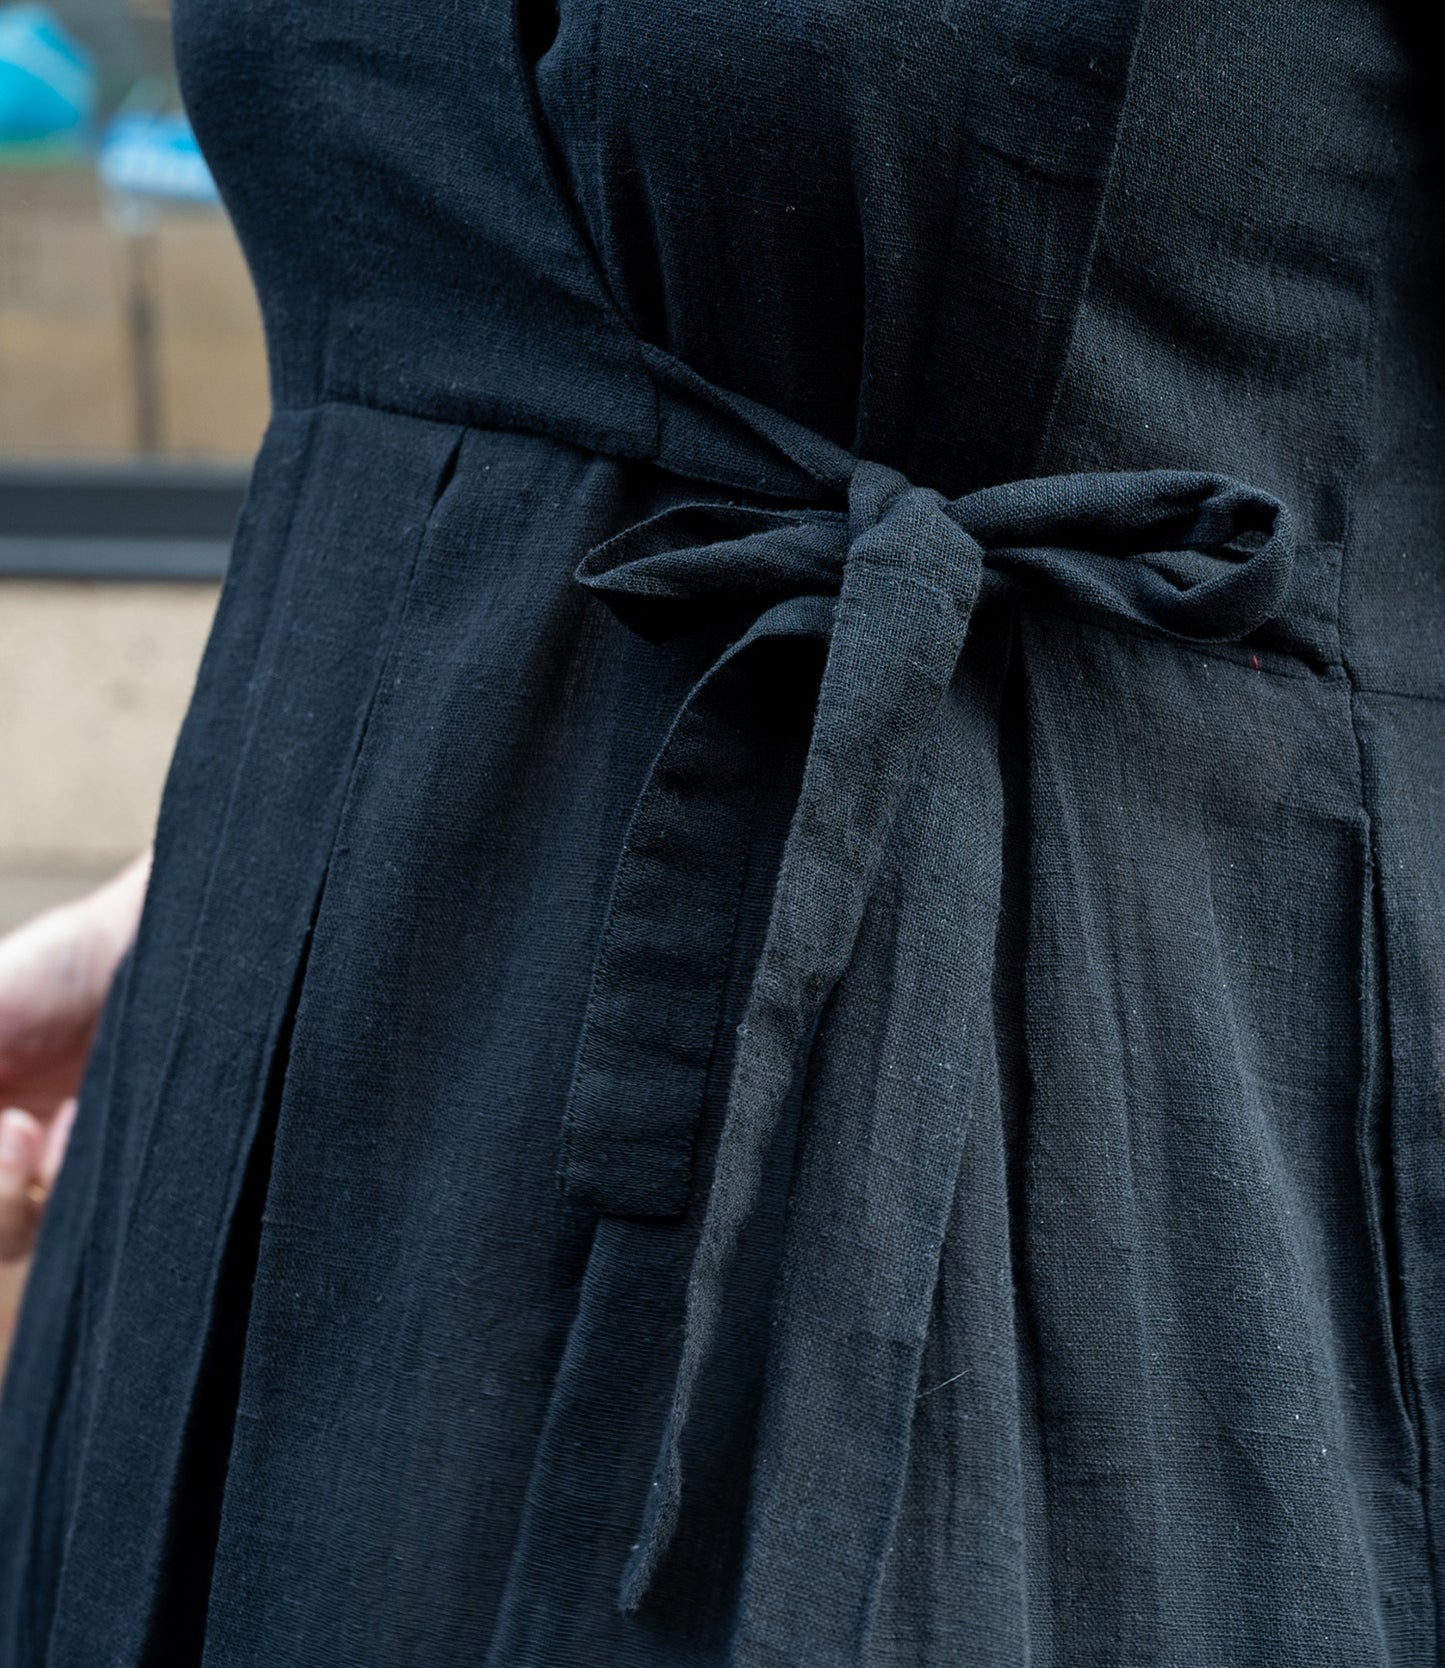 Black cotton dress with three quarter sleeves